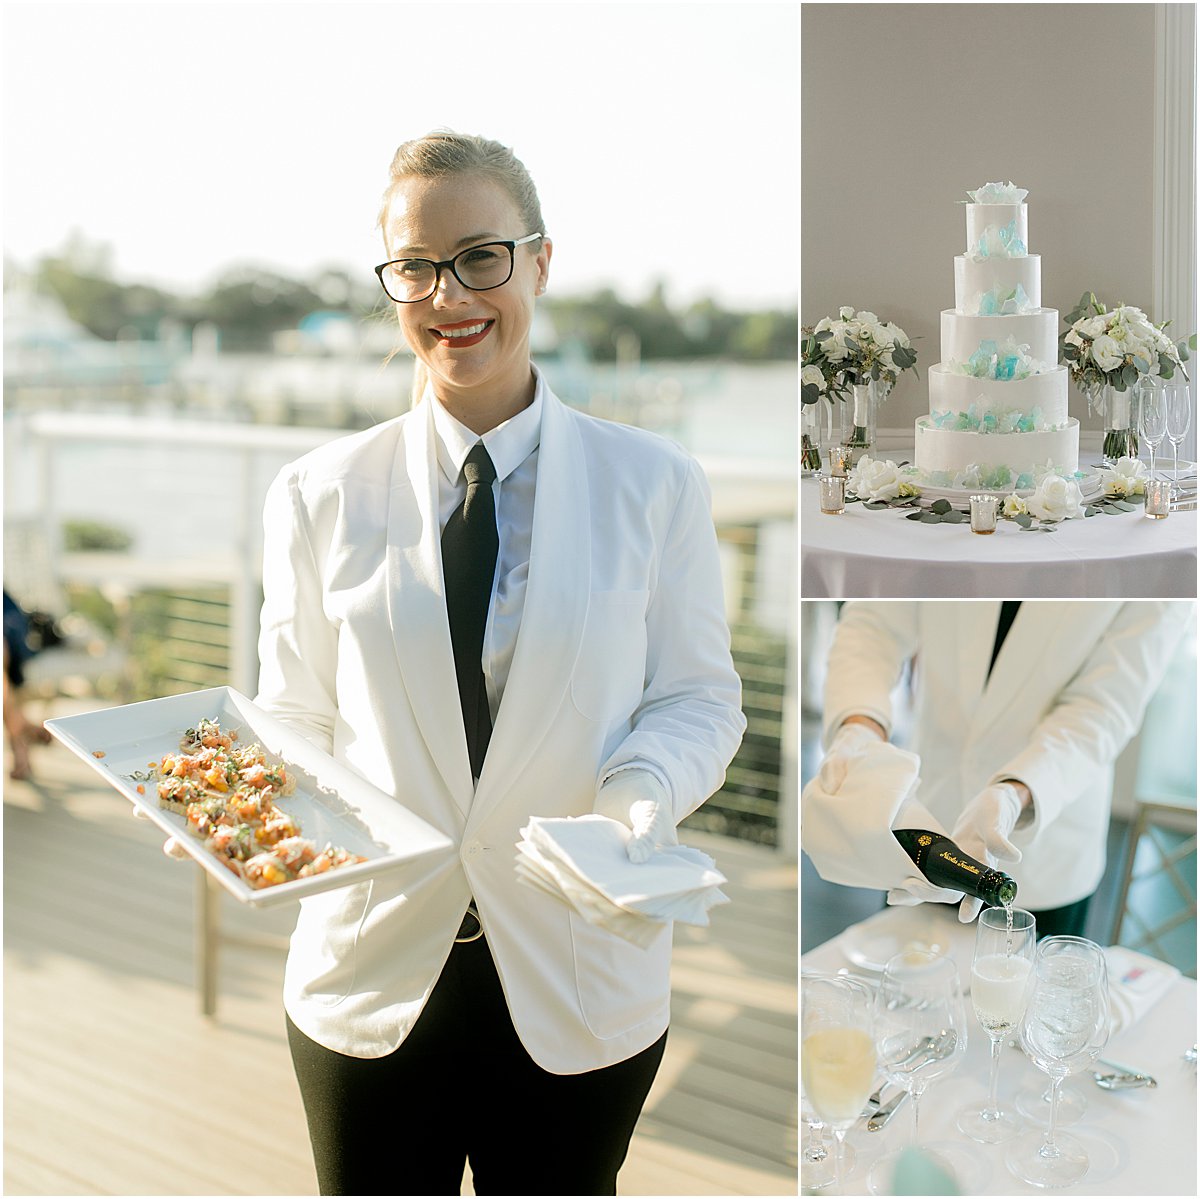 Modern, Elegant Wedding Catering | Pelican Club | Jupiter, FL | Married in Palm Beach | www.marriedinpalmbeach.com | Karla Korn Photography